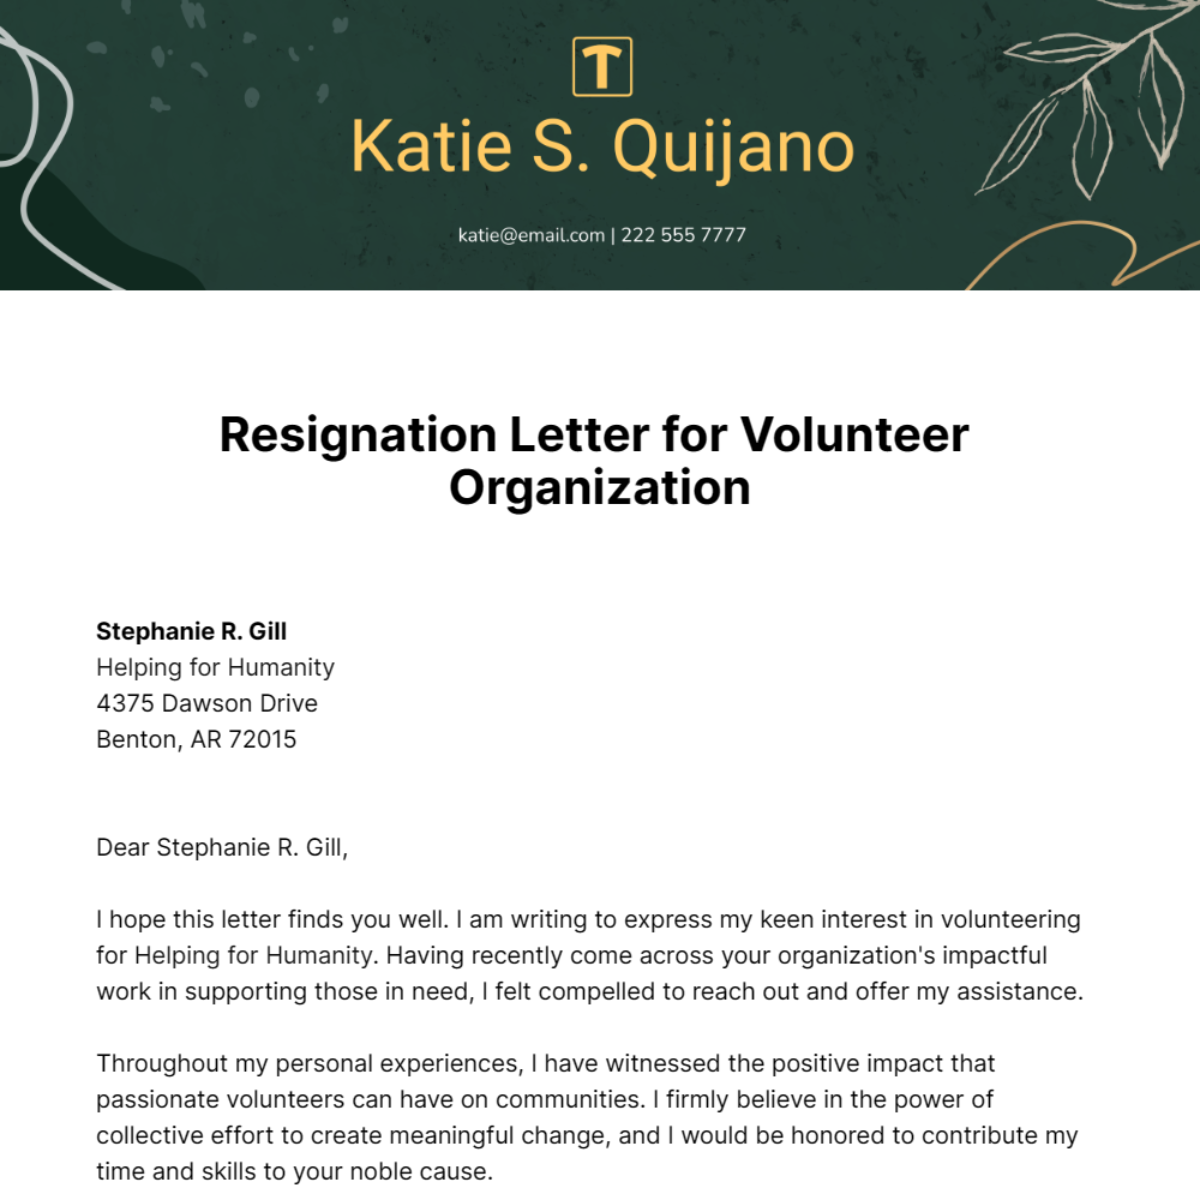 Resignation Letter for Volunteer Organization Template